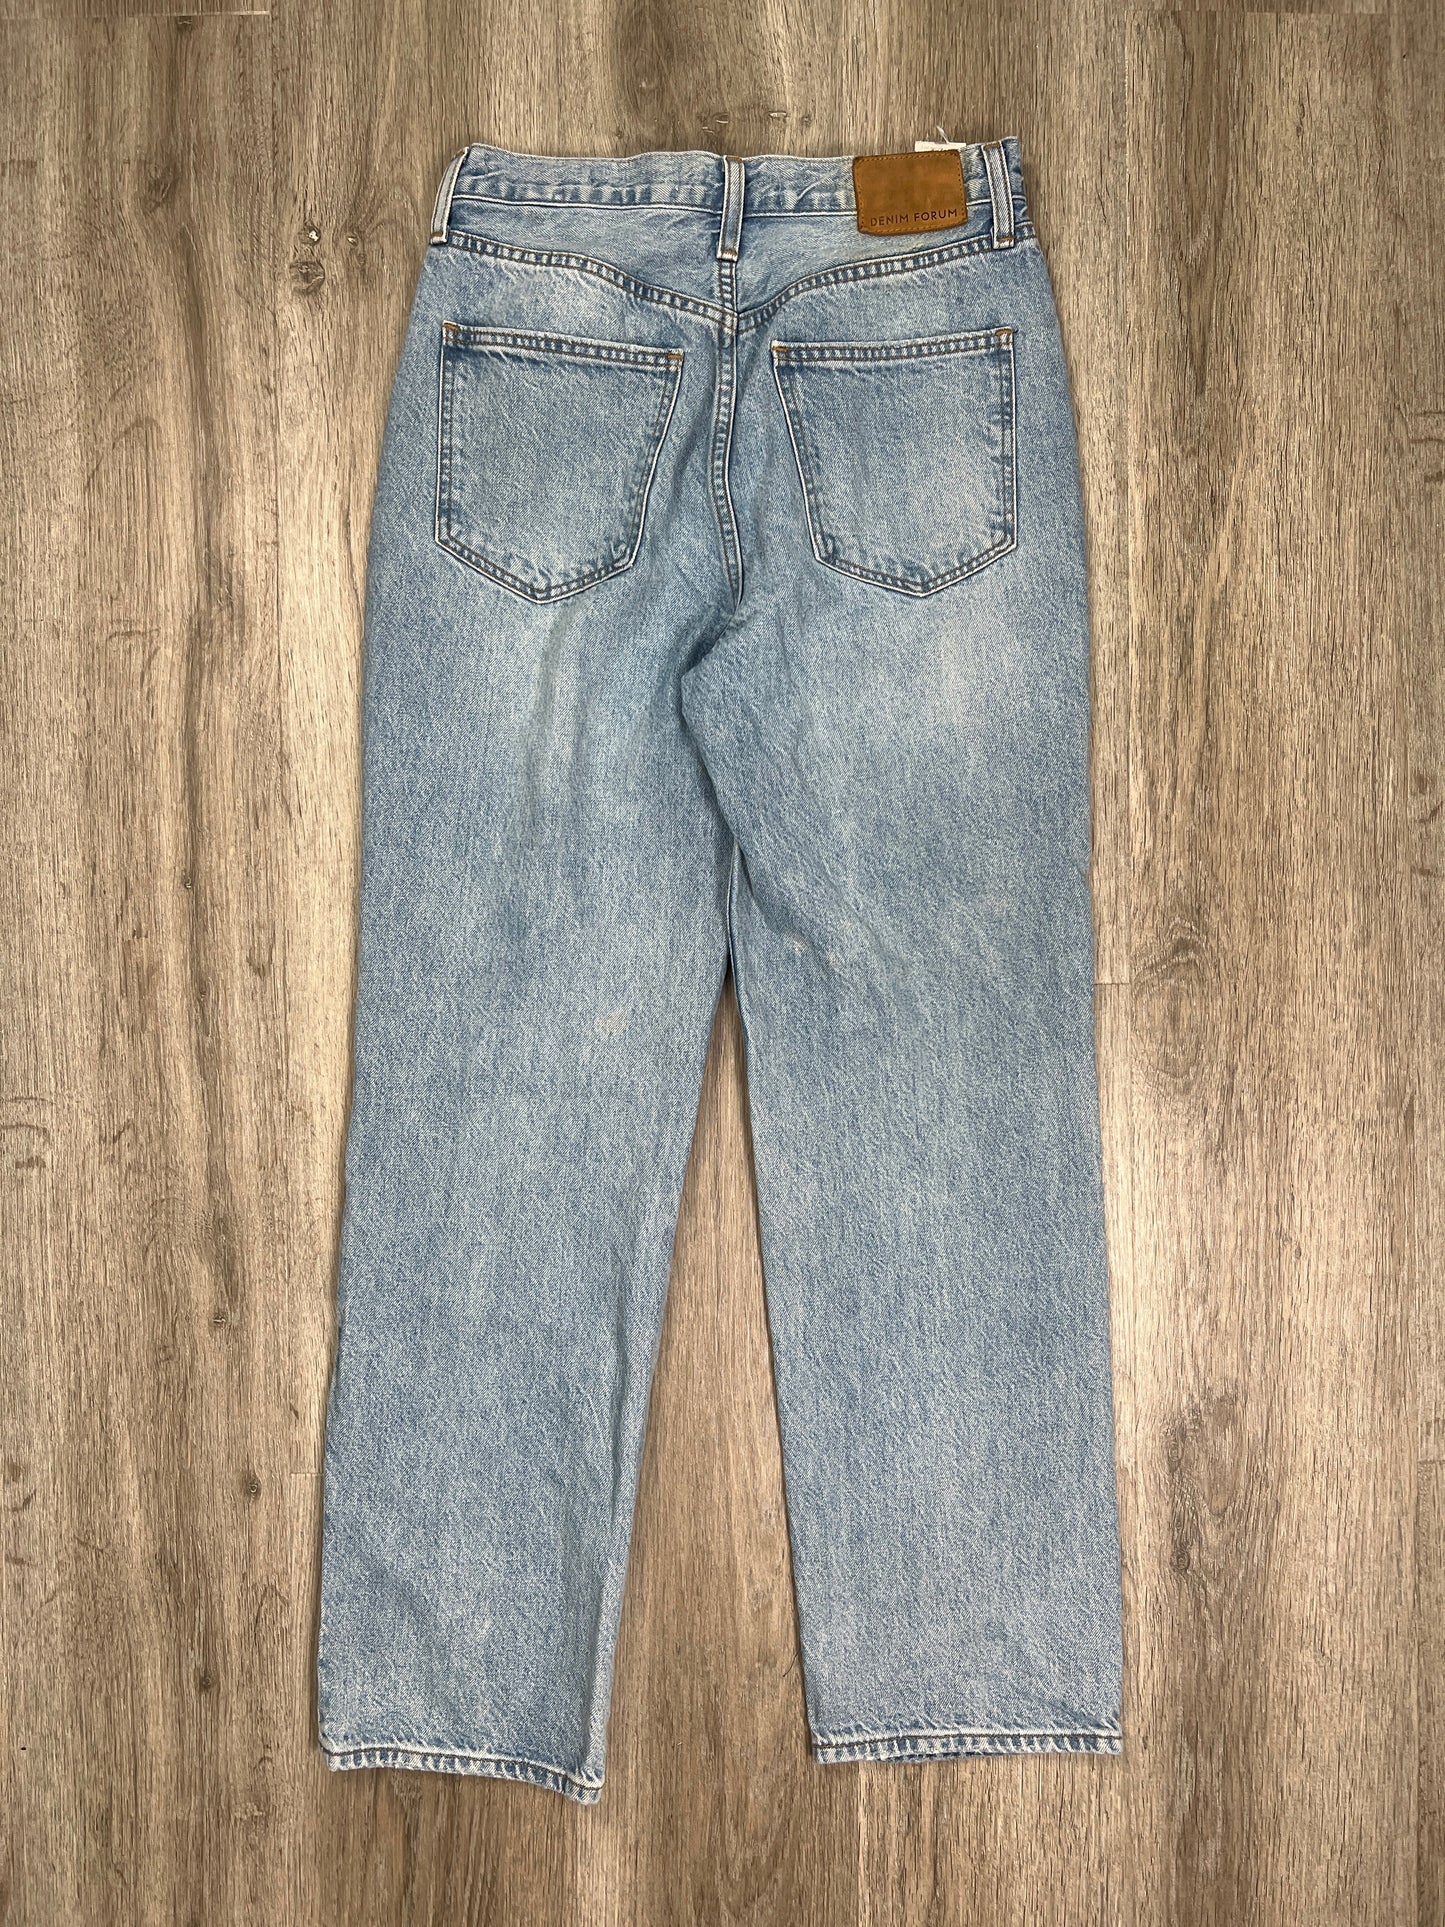 Blue Denim Jeans Straight DENIM FORUM, Size 2